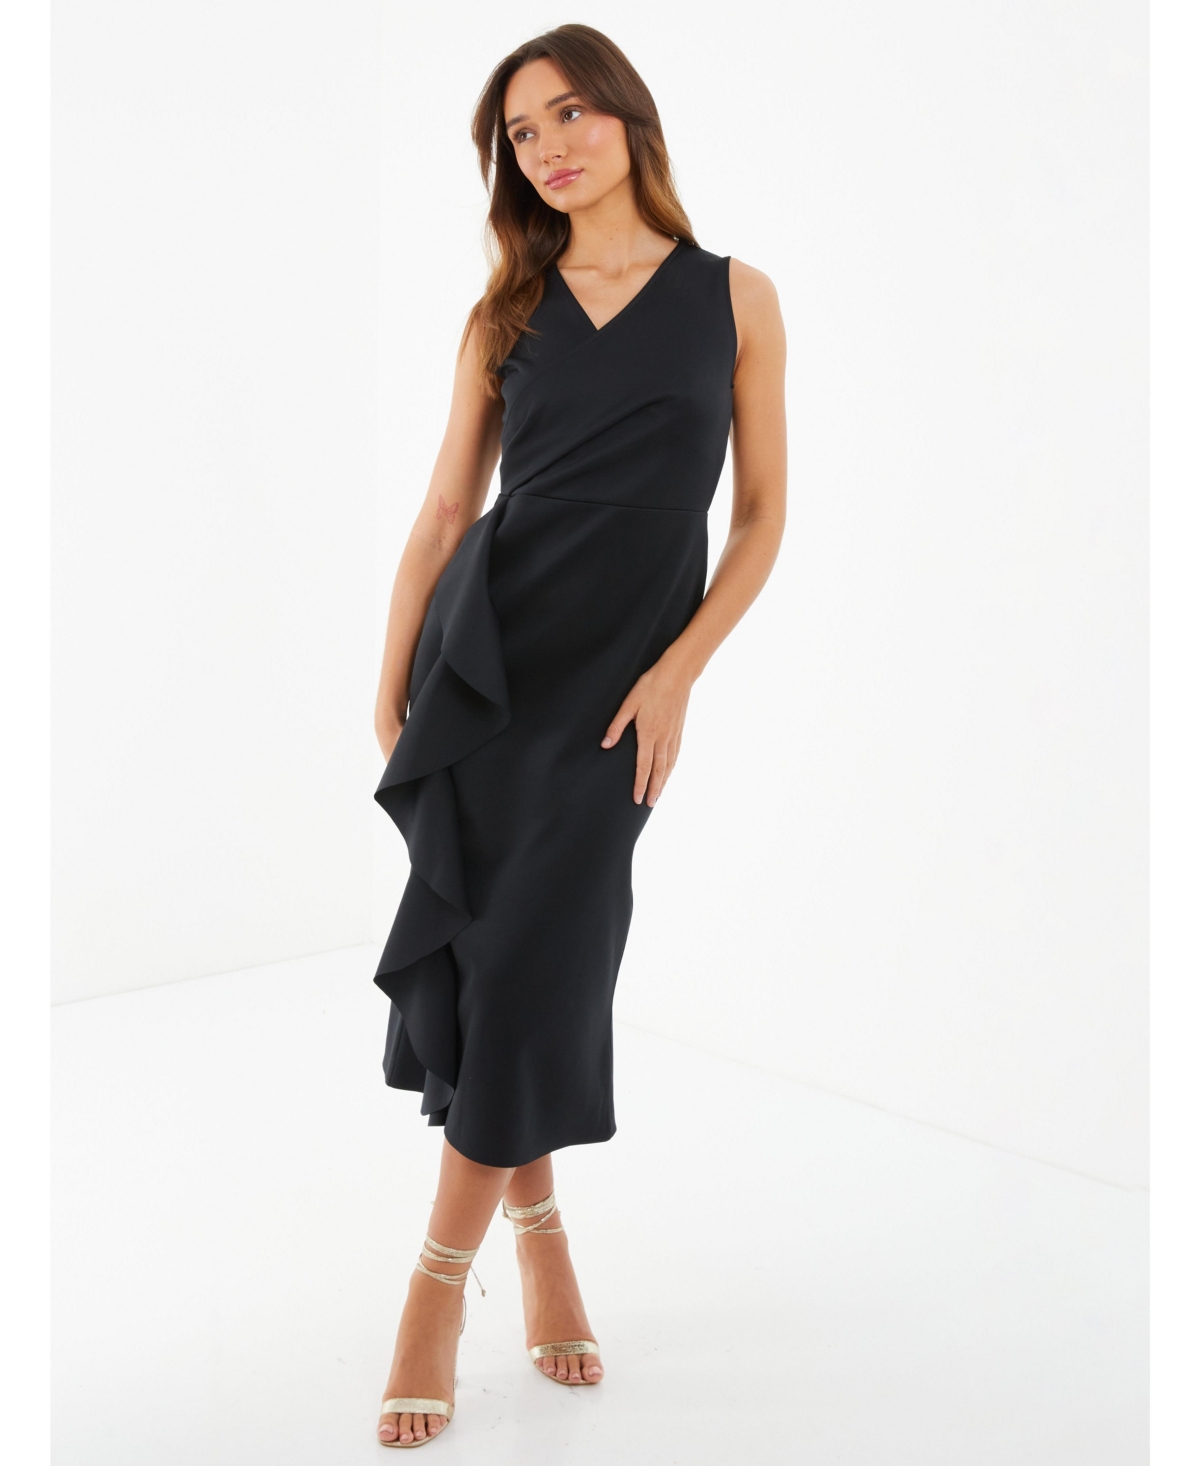 Women's Frill Detail Wrap Dress - Black